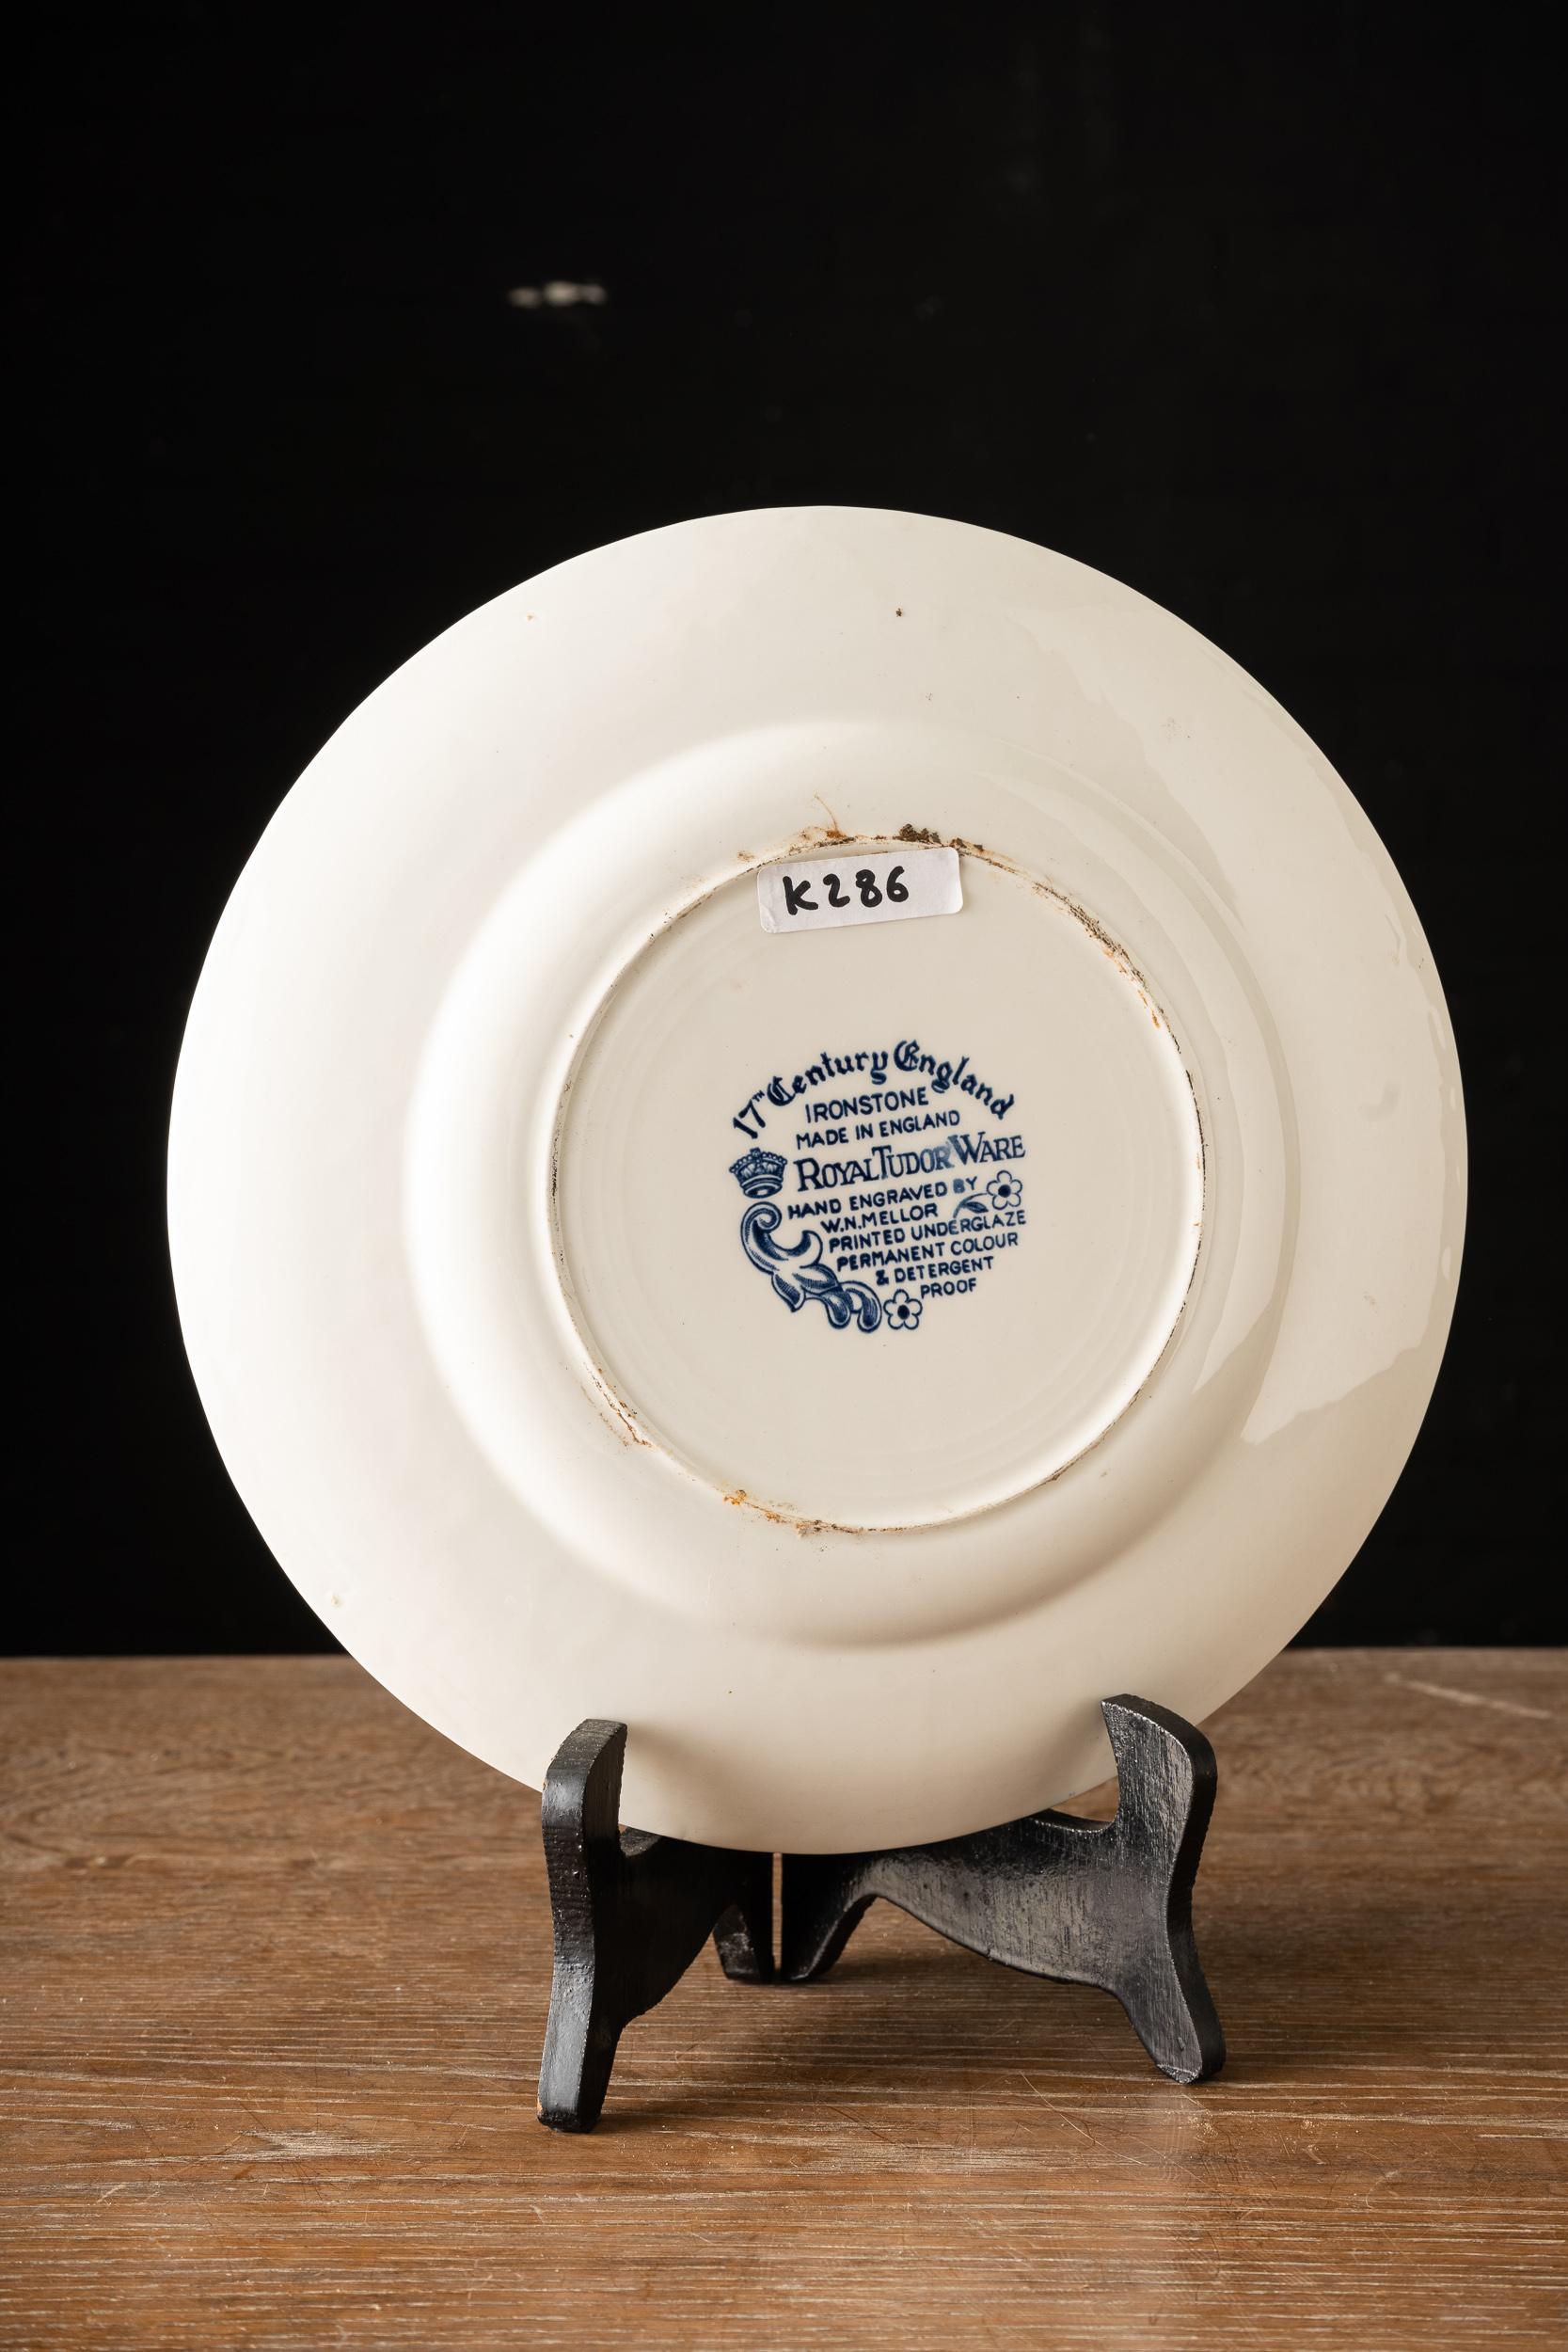 English Decorative Royal Tudorware Plate, England, Deep Blue Decorations, Hand Engraved